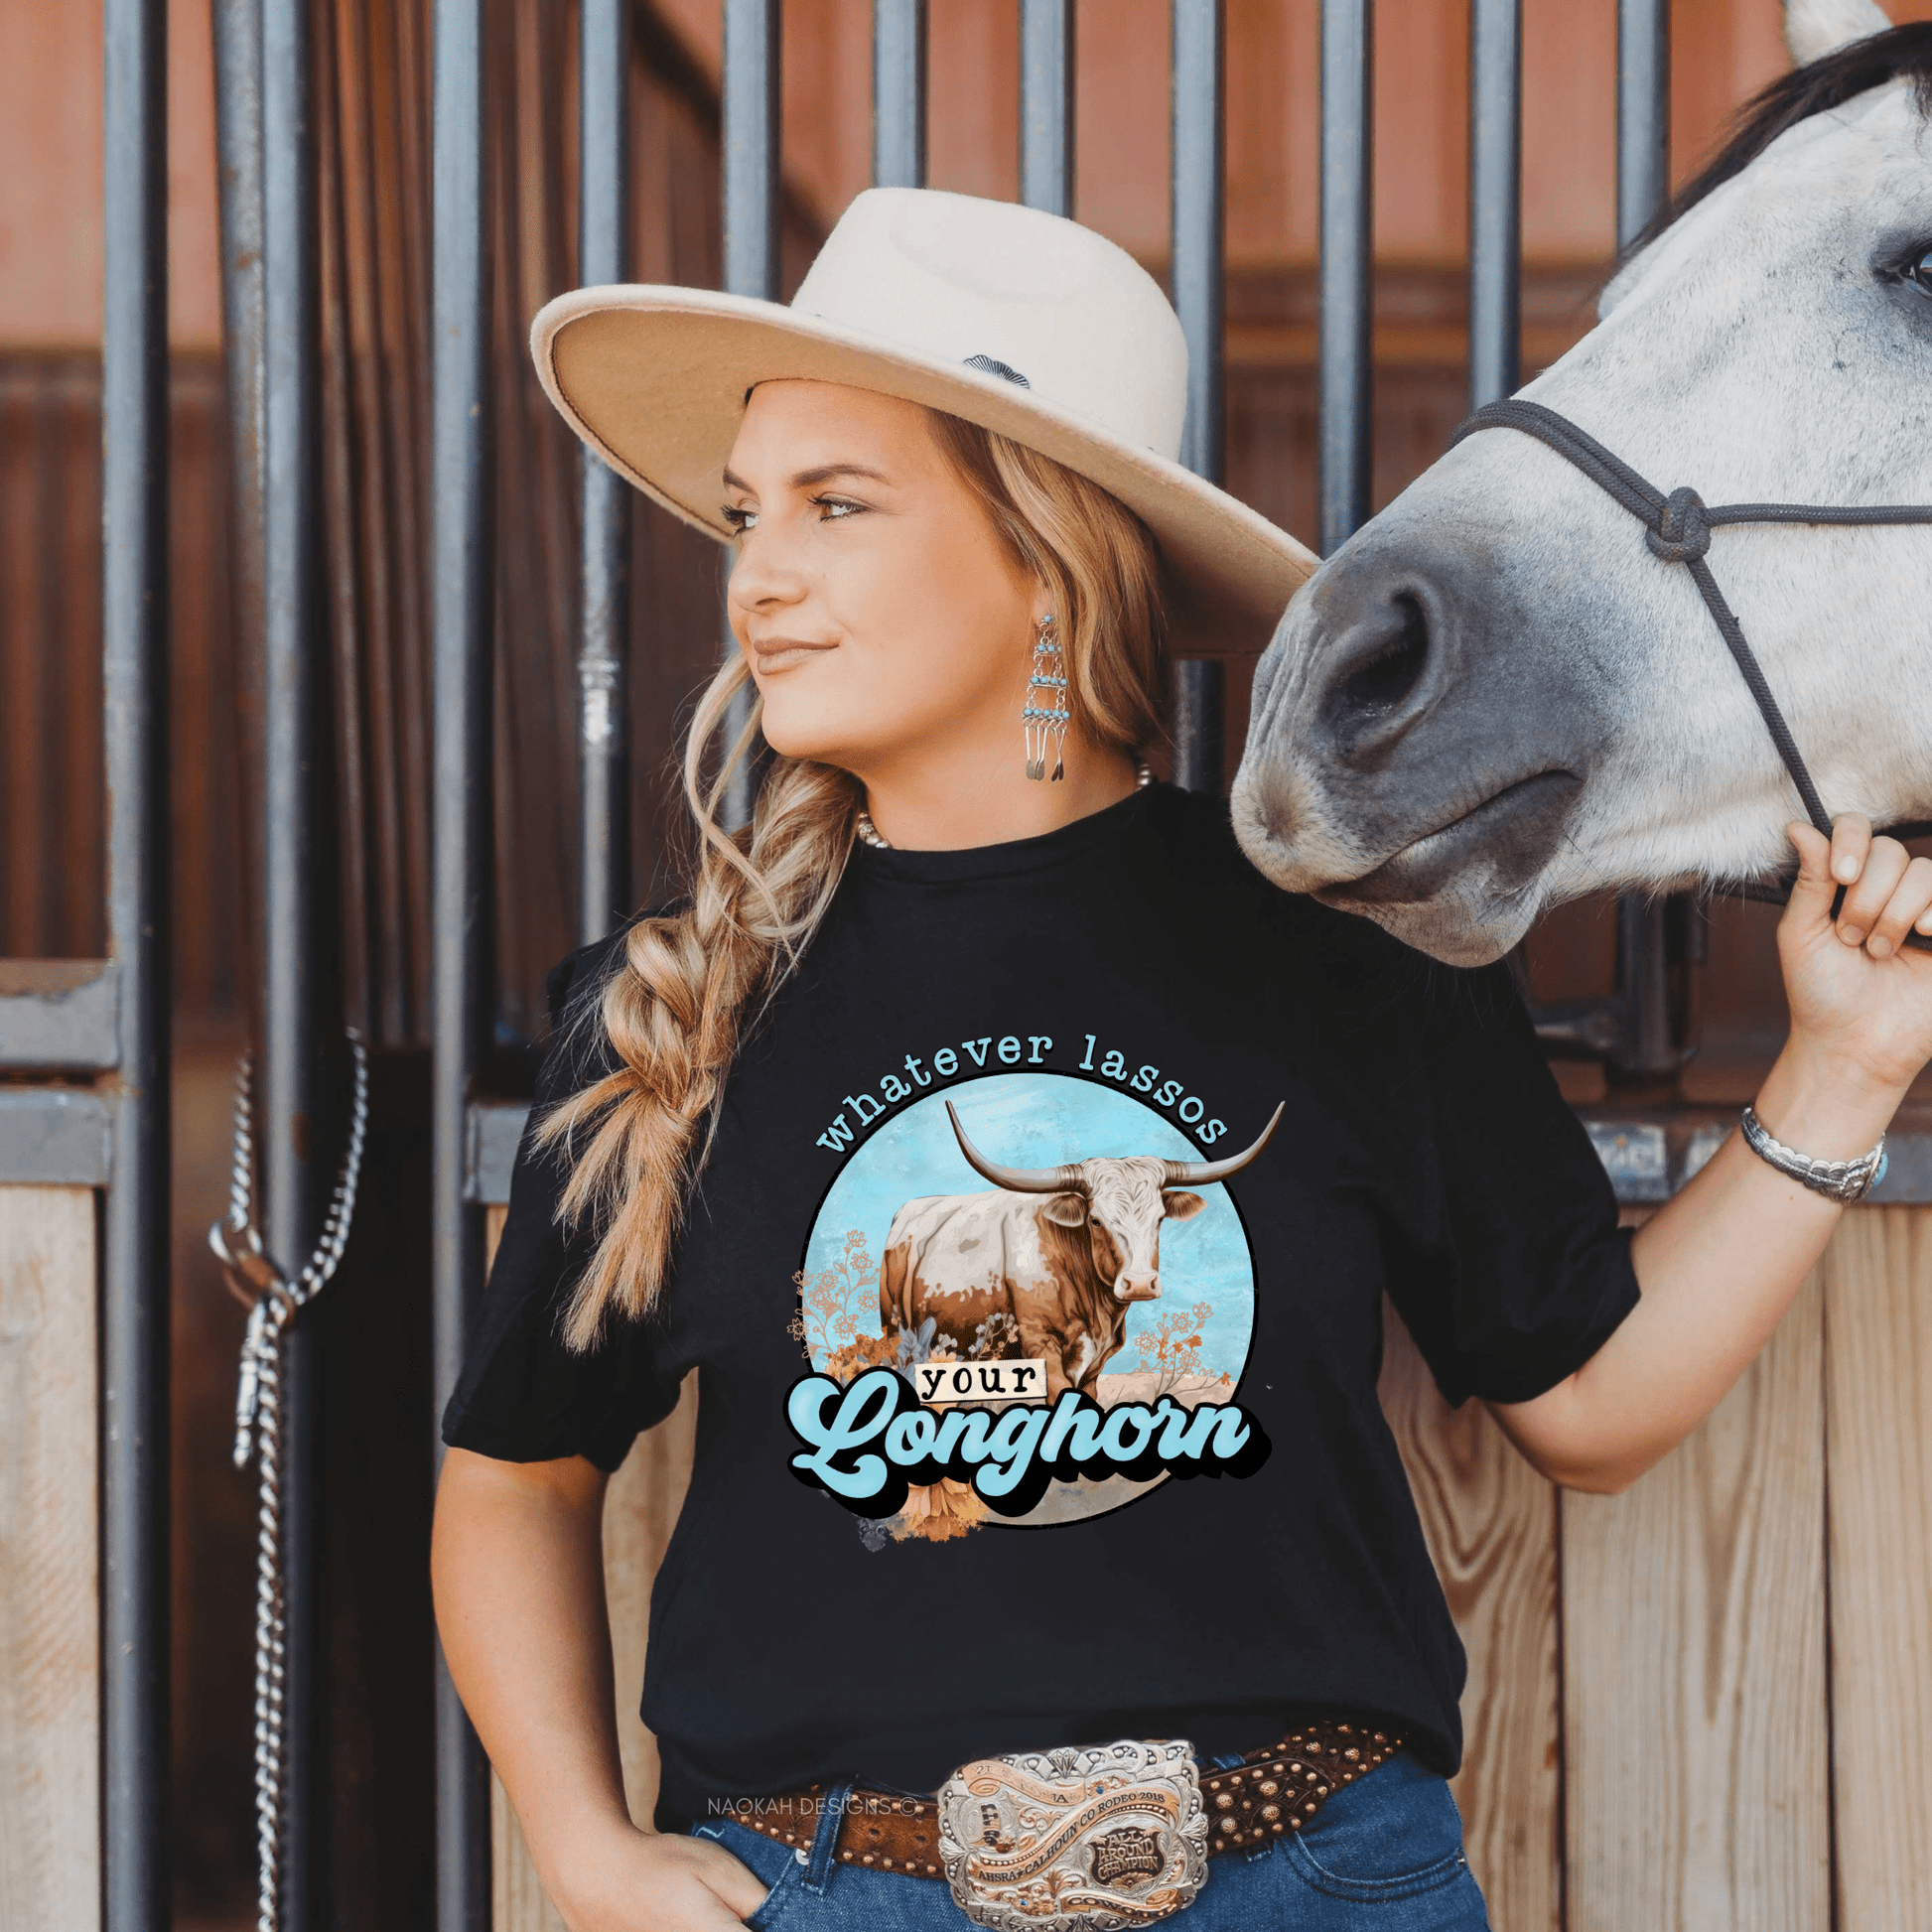 Whatever Lassos Your Longhorn Shirt, Cowgirl Shirt, Cowboy Shirt, Gift for Country Fan, Farm Life Shirt, Farmer Shirt, Western Rodeo Shirt, rodeo bachelorette shirt, Texas native shirt, gift for farmer, shop local farm, farm fresh shirt